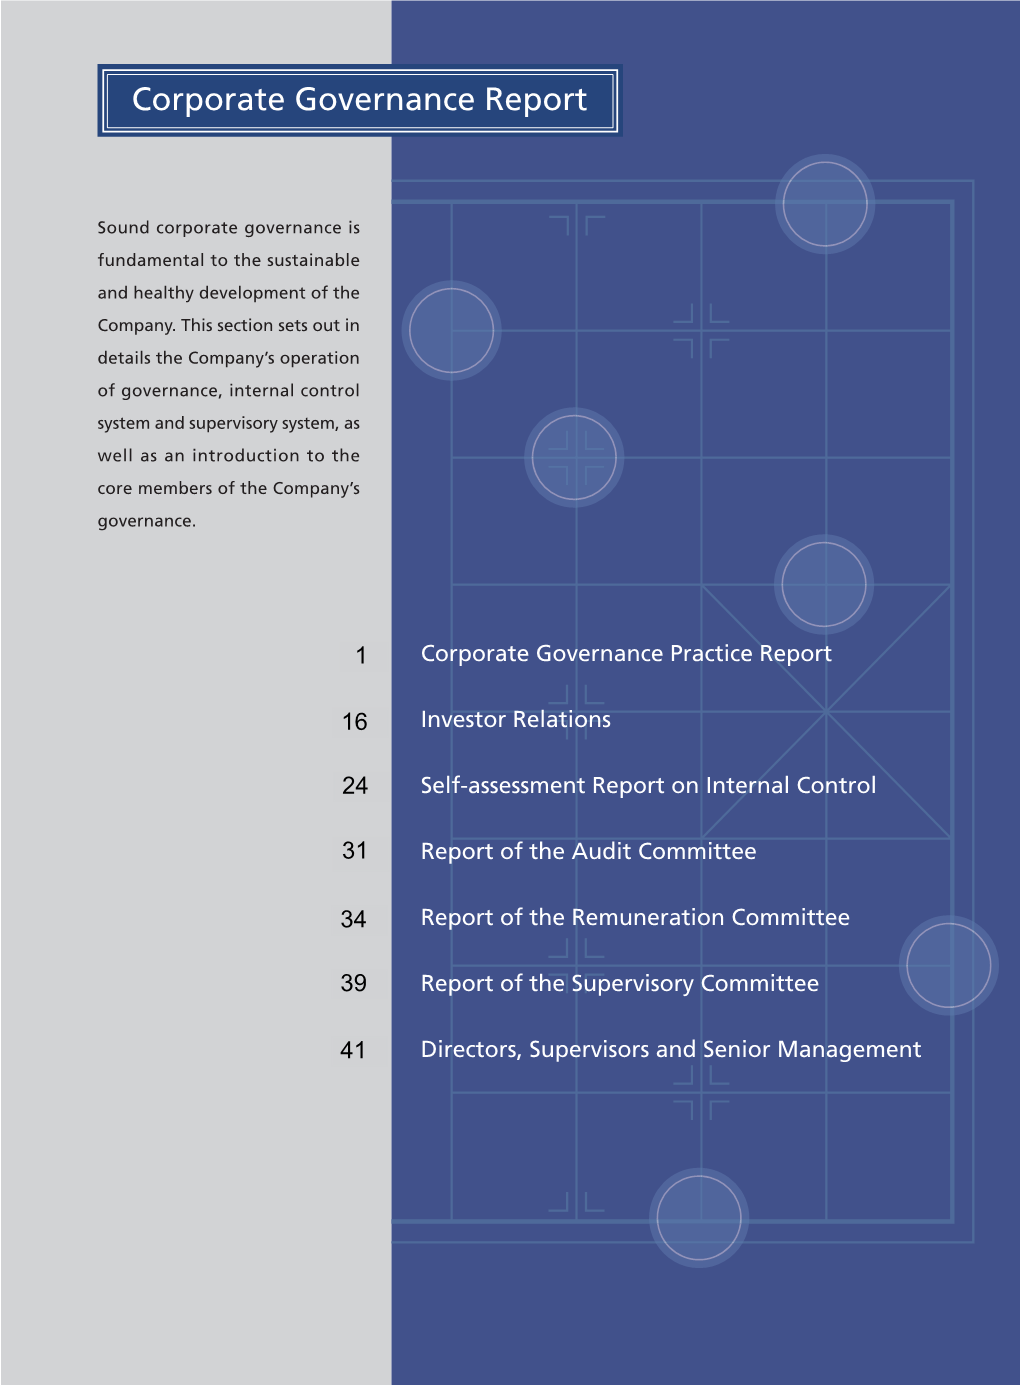 Corporate Governance Report (2010)